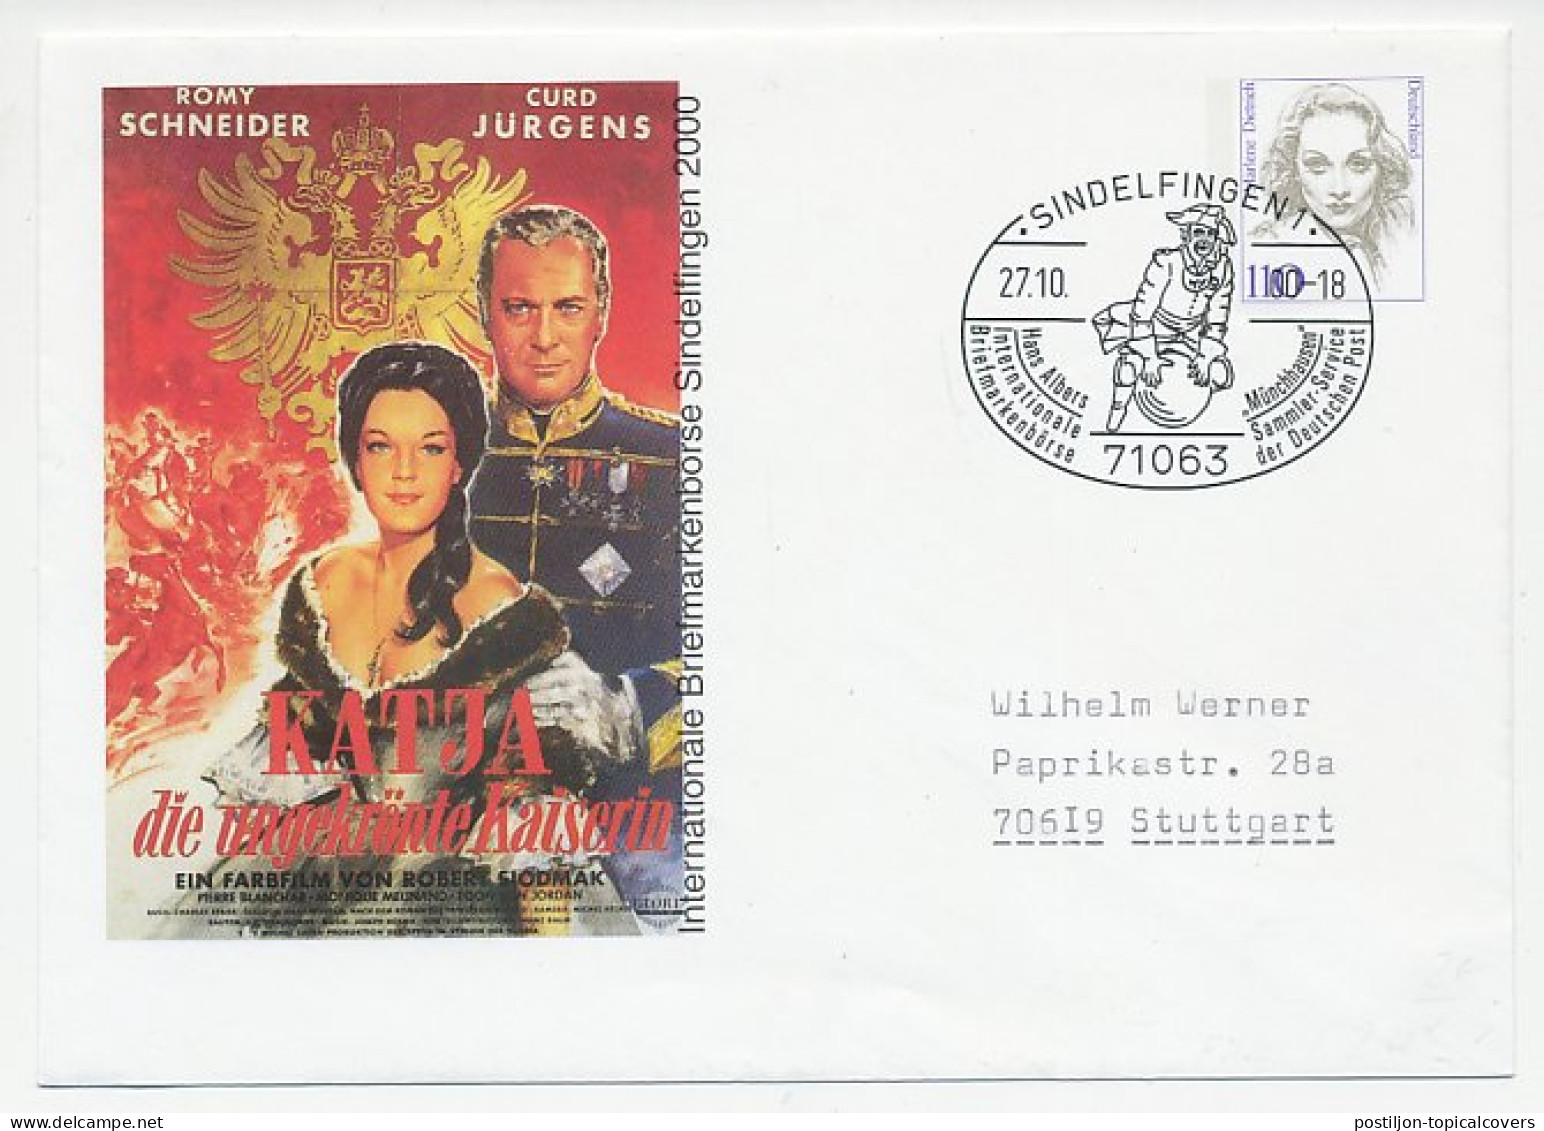 Postal Stationery / Postmark Germany 2000 Katja - The Uncrowned Empress  - Cinema